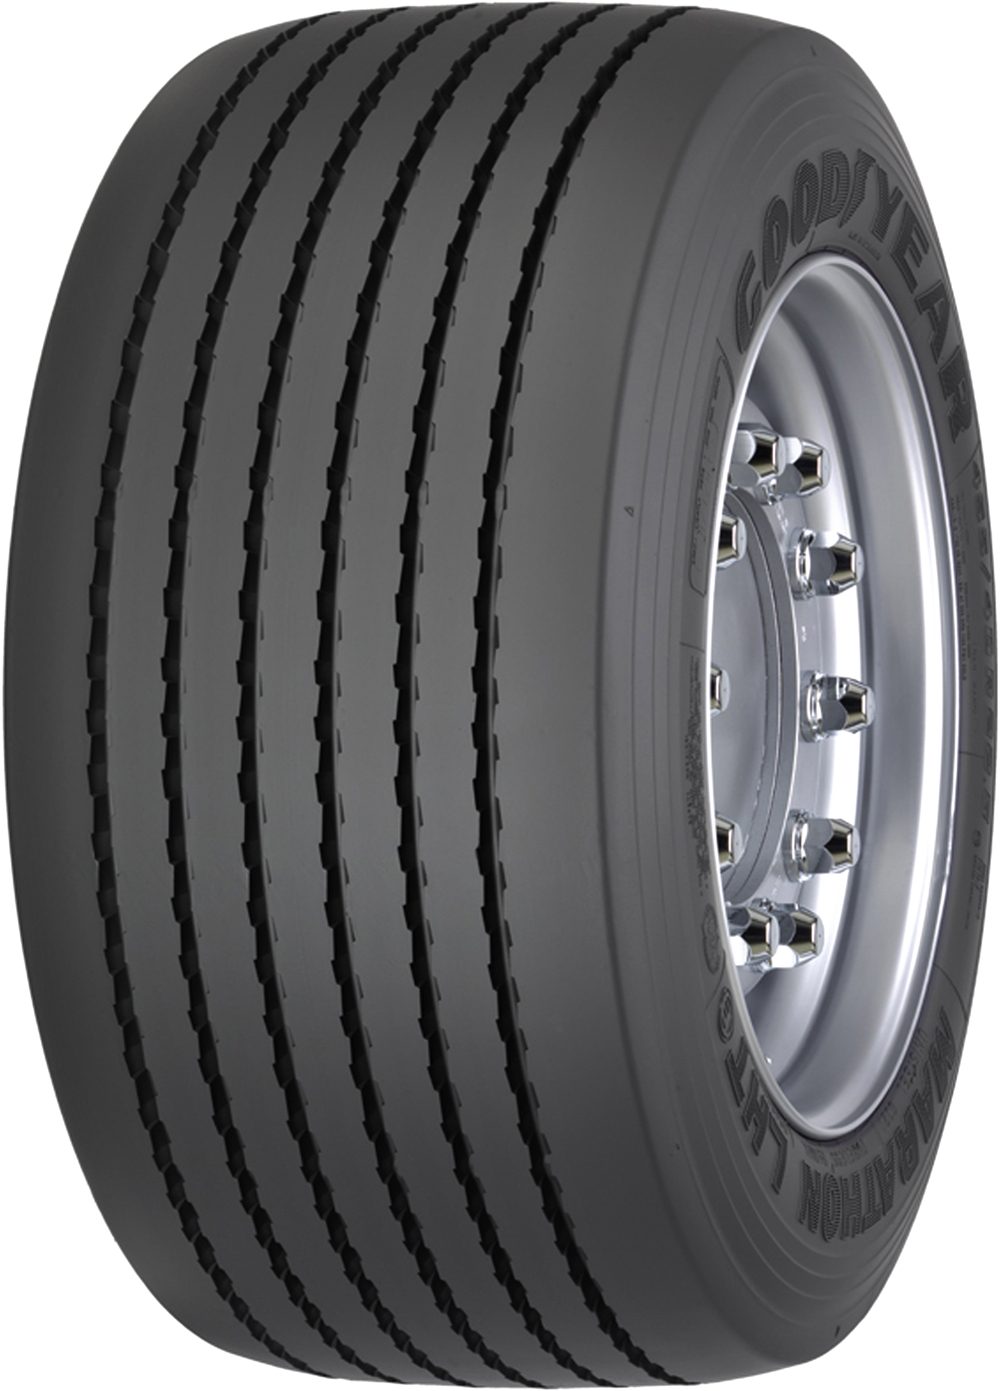 product_type-heavy_tires GOODYEAR MARATHON LHT+ TL 455/40 R22.5 160J